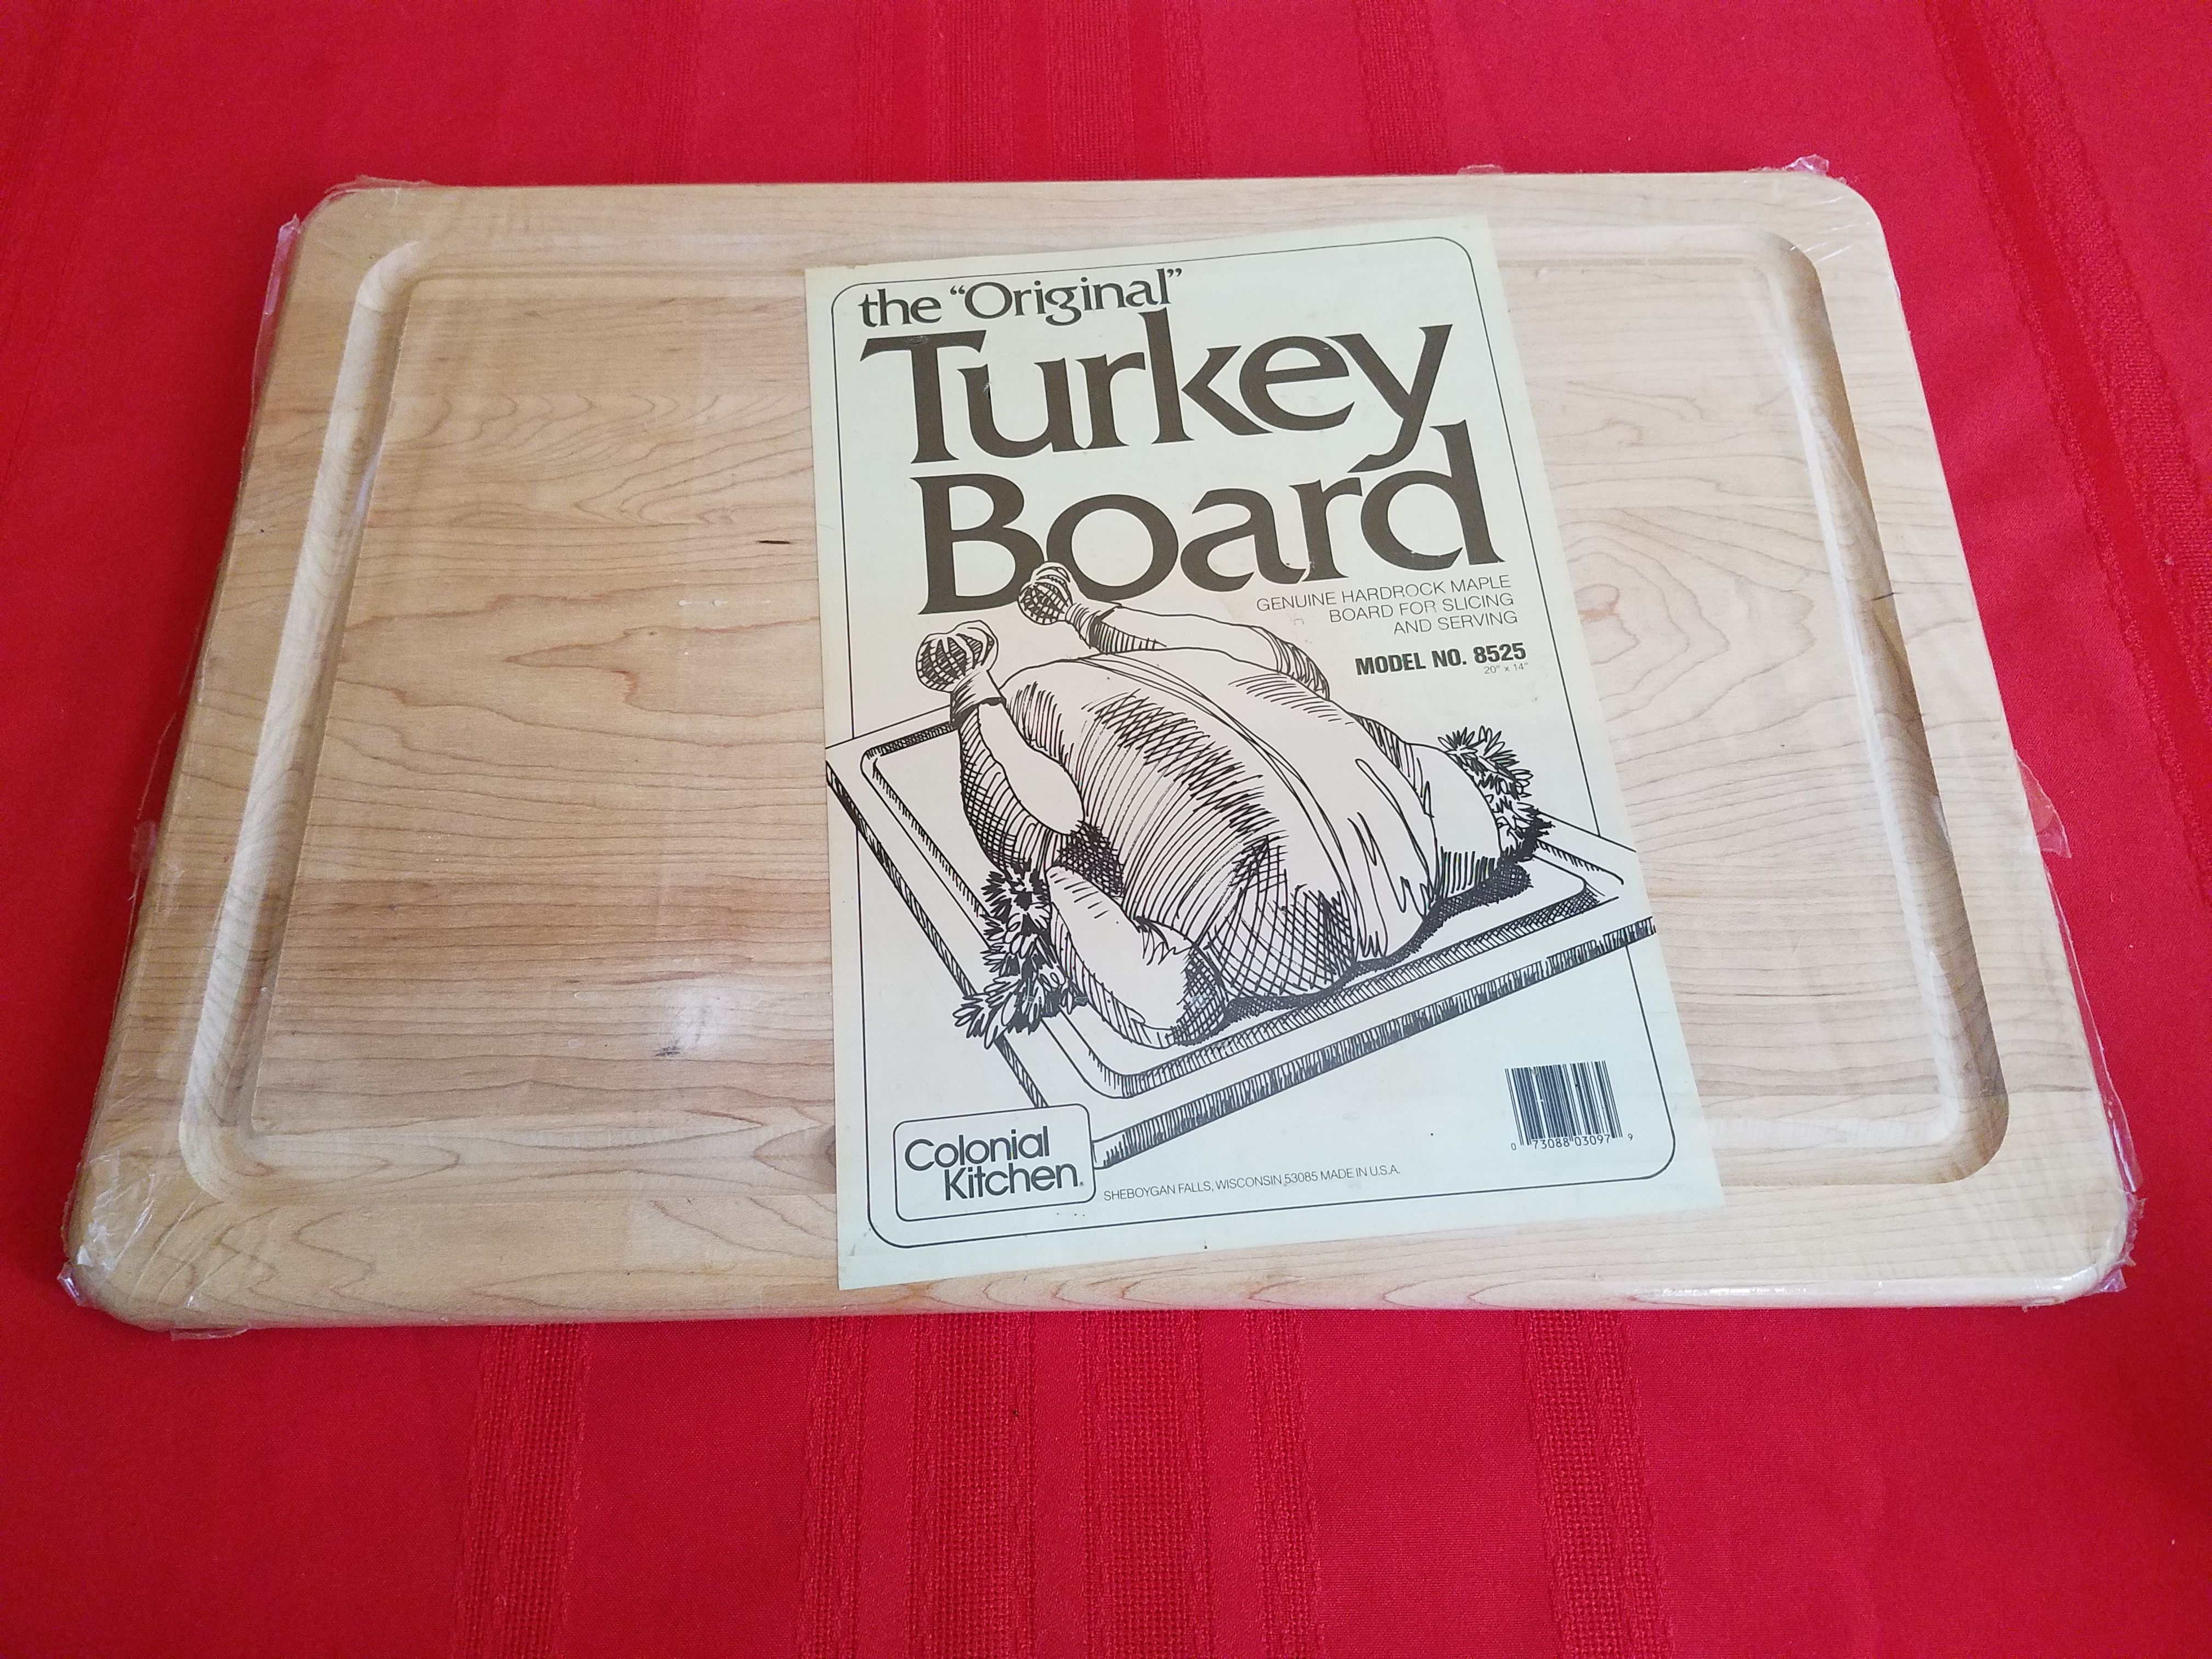 New Turkey Board by Colonial Kitchen